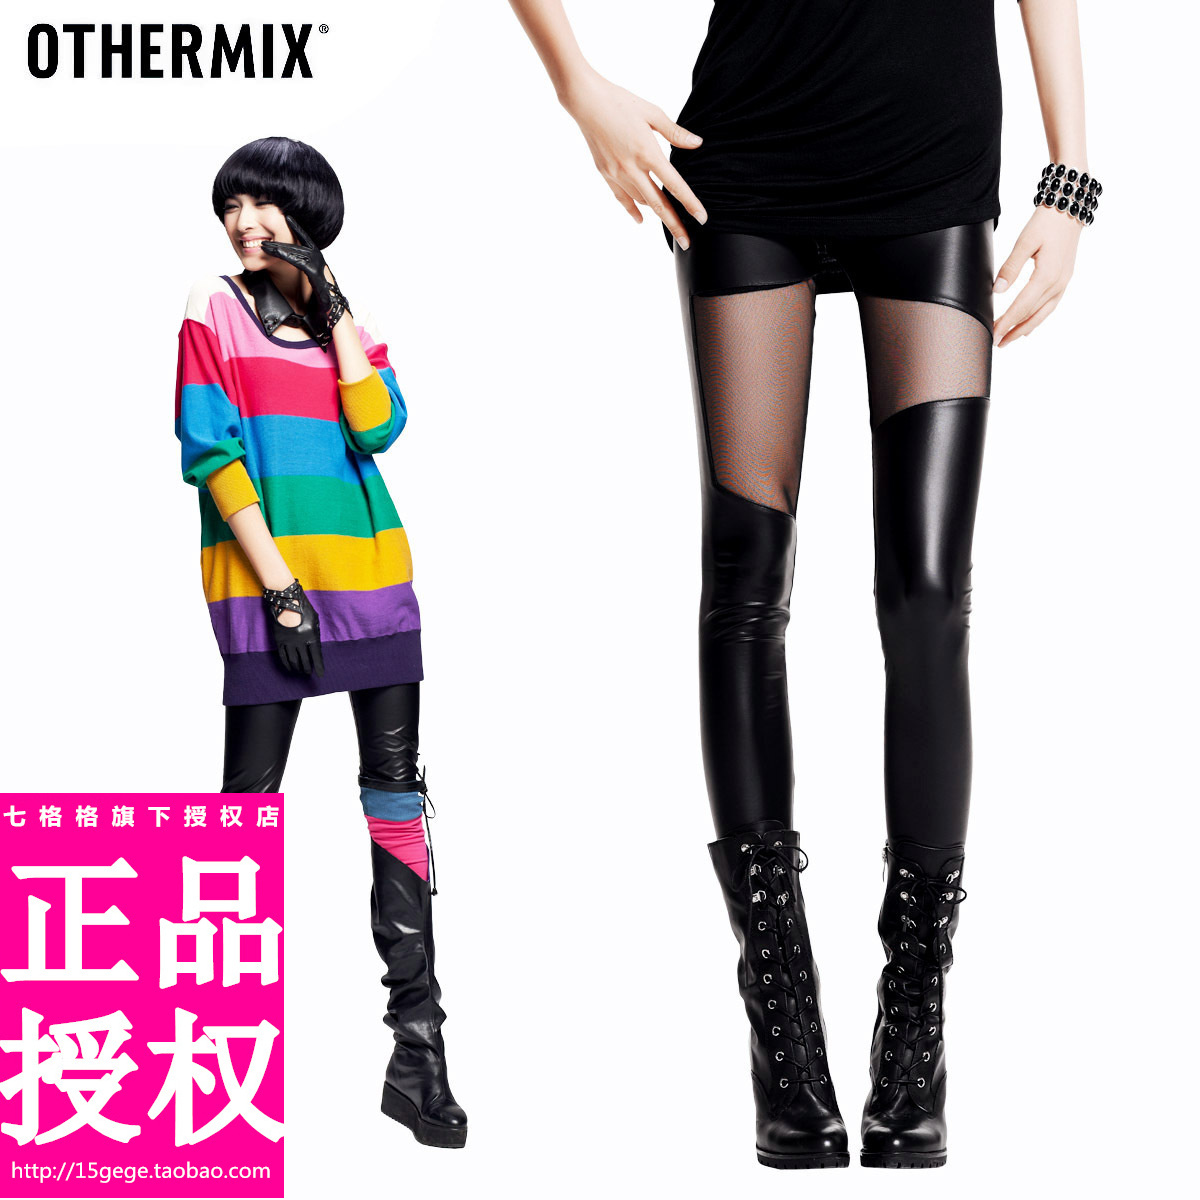 Free Shipping Othermix women's PU faux leather legging leggings 12t10026